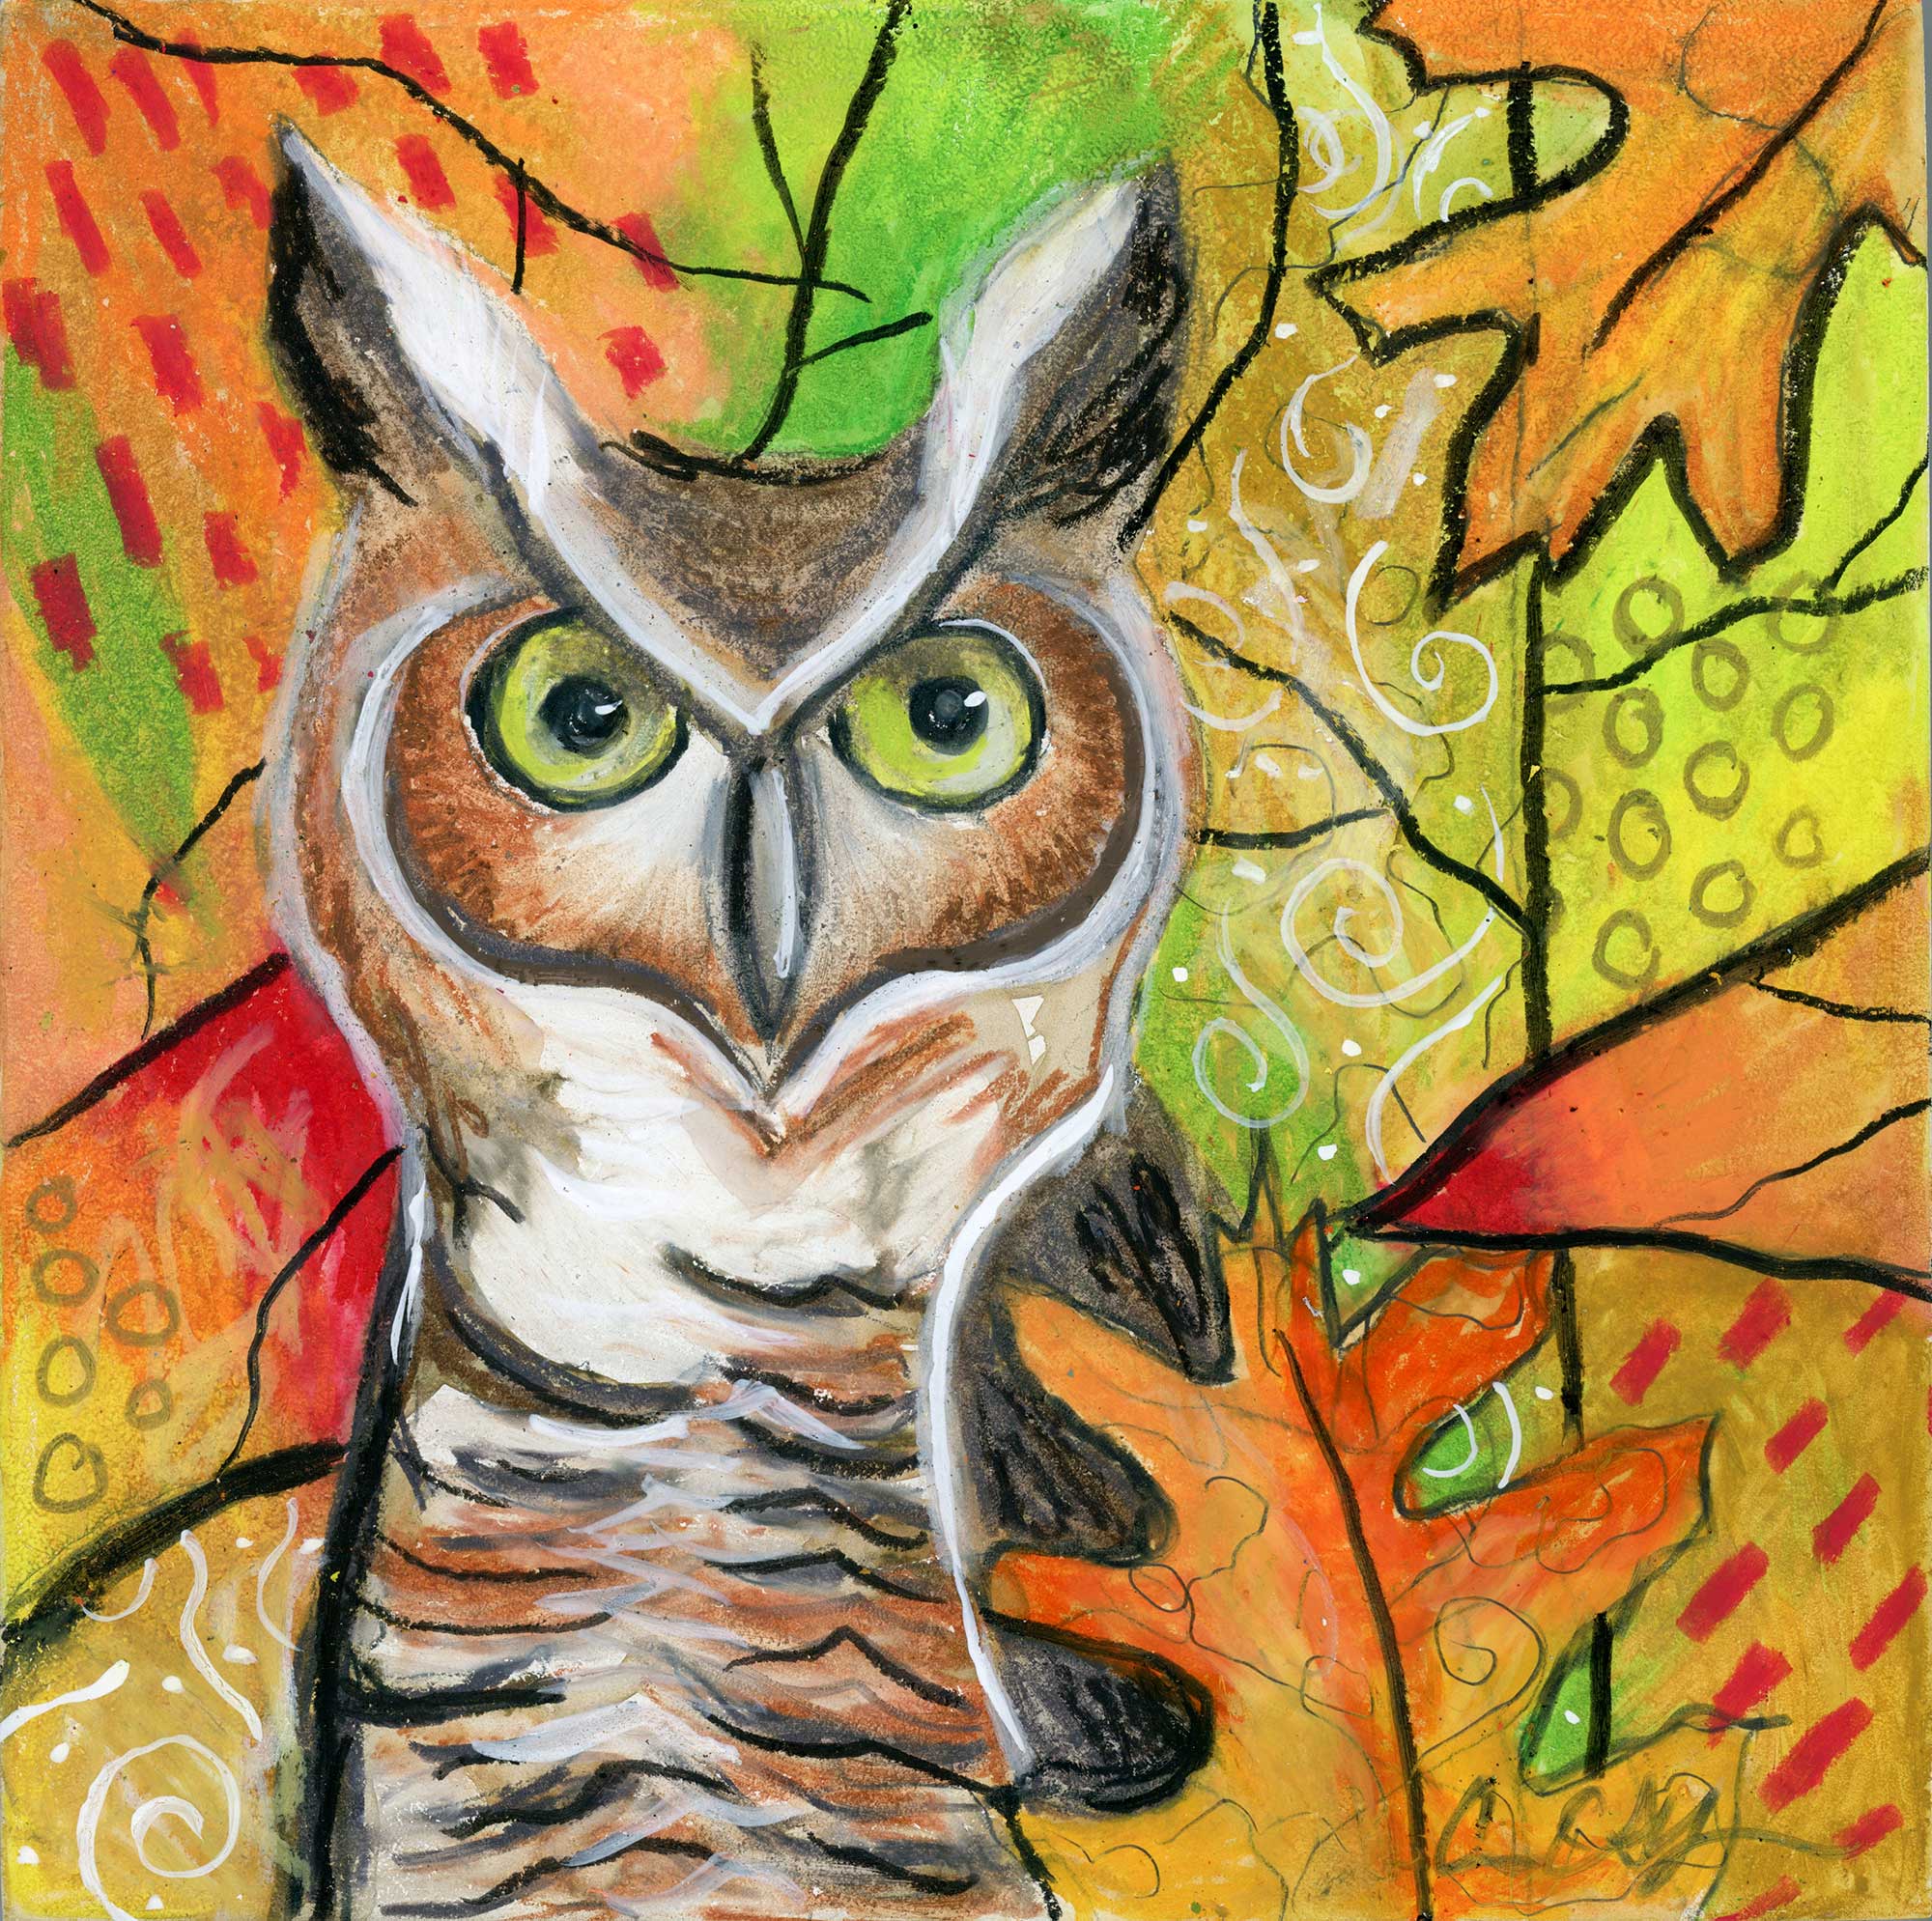 SOLD - "Autumn Owl", 6" x 6", mixed media